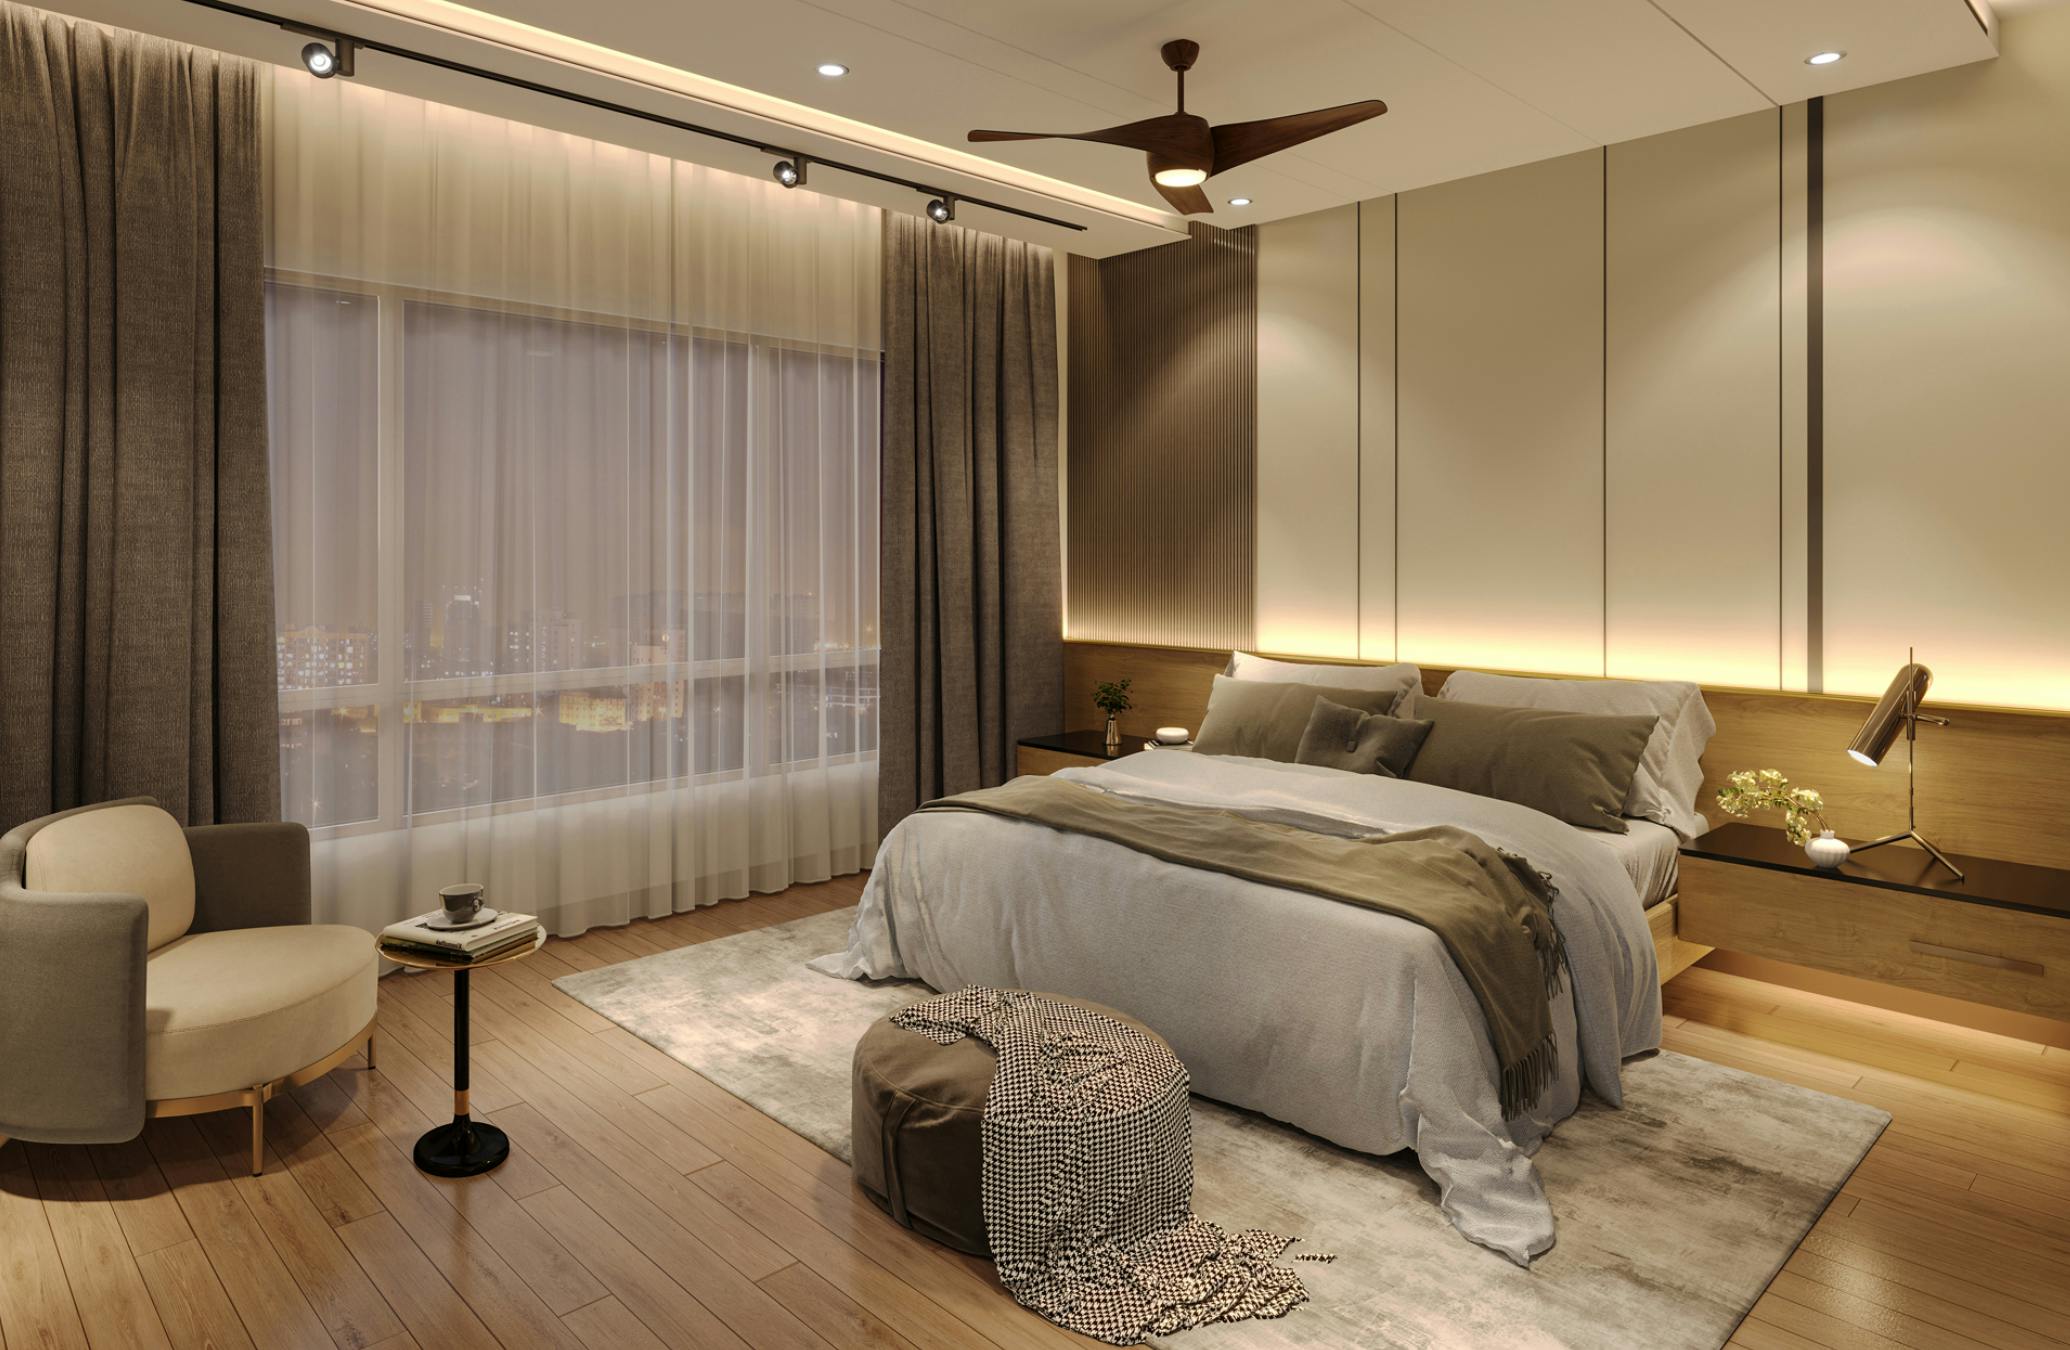 3 bhk luxury flats in pune